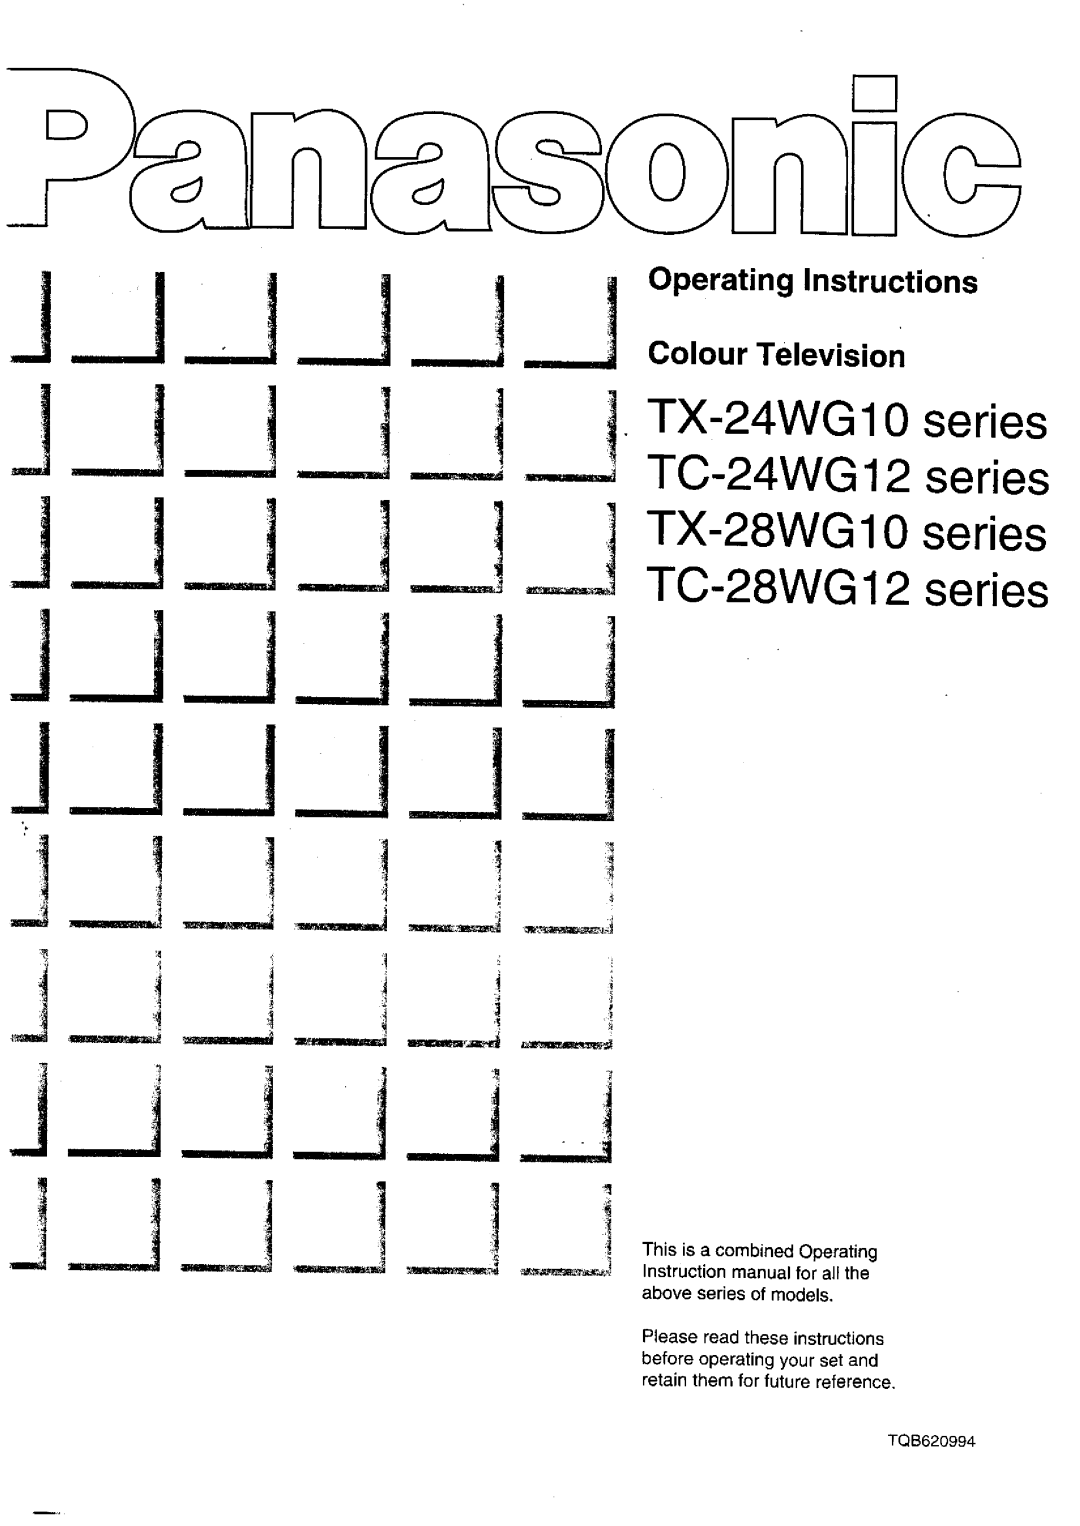 Panasonic TX-28WG10 Series, TX-24WG12 Series, TX-28WG12 Series, TX-24WG10 Series manual 